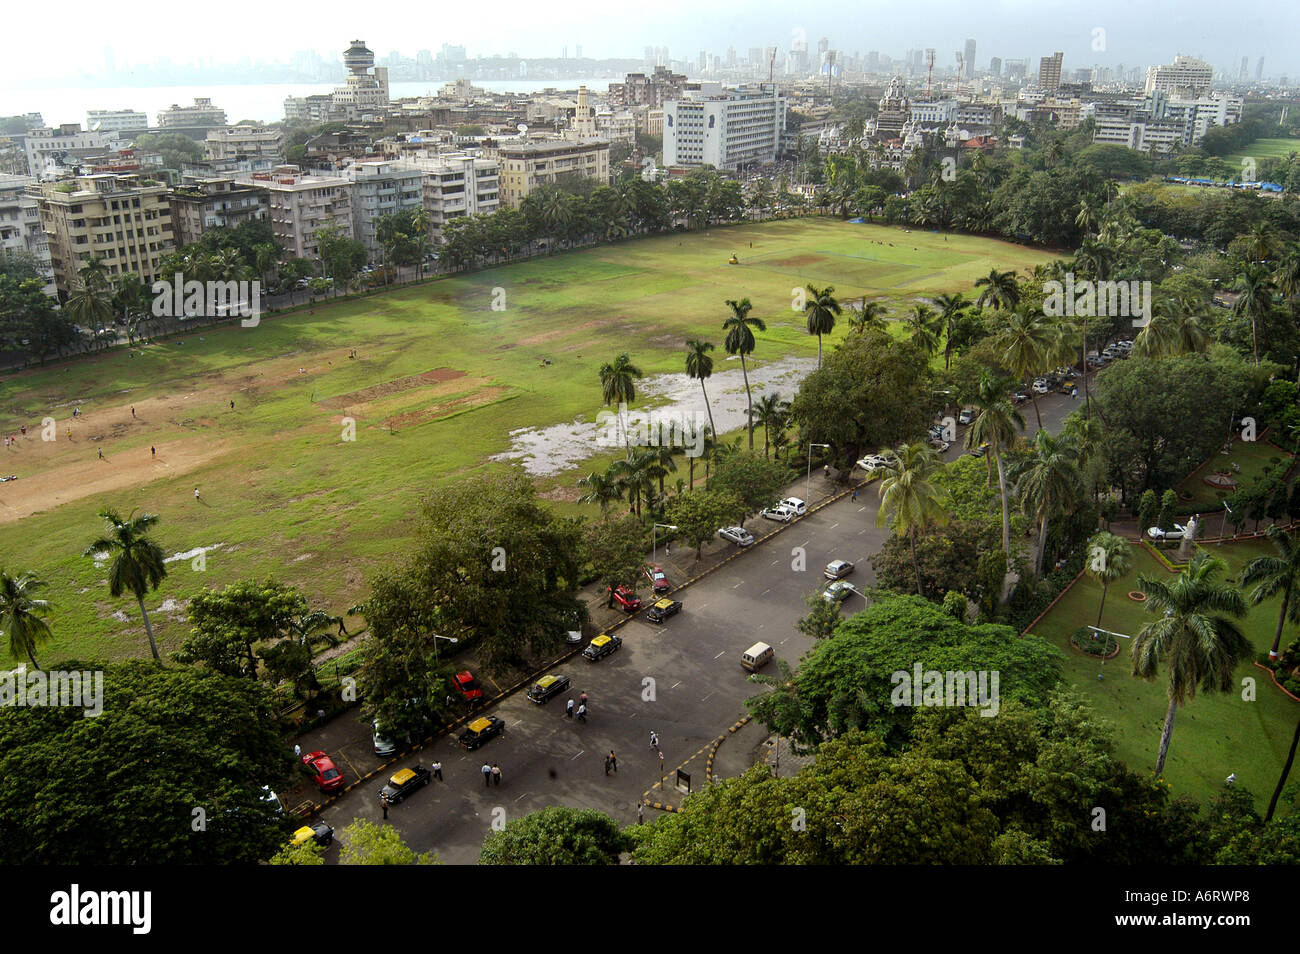 ASB77298 Aerial view of cricket and football playing field Oval maidan in Bombay now Mumbai Maharashtra India Stock Photo